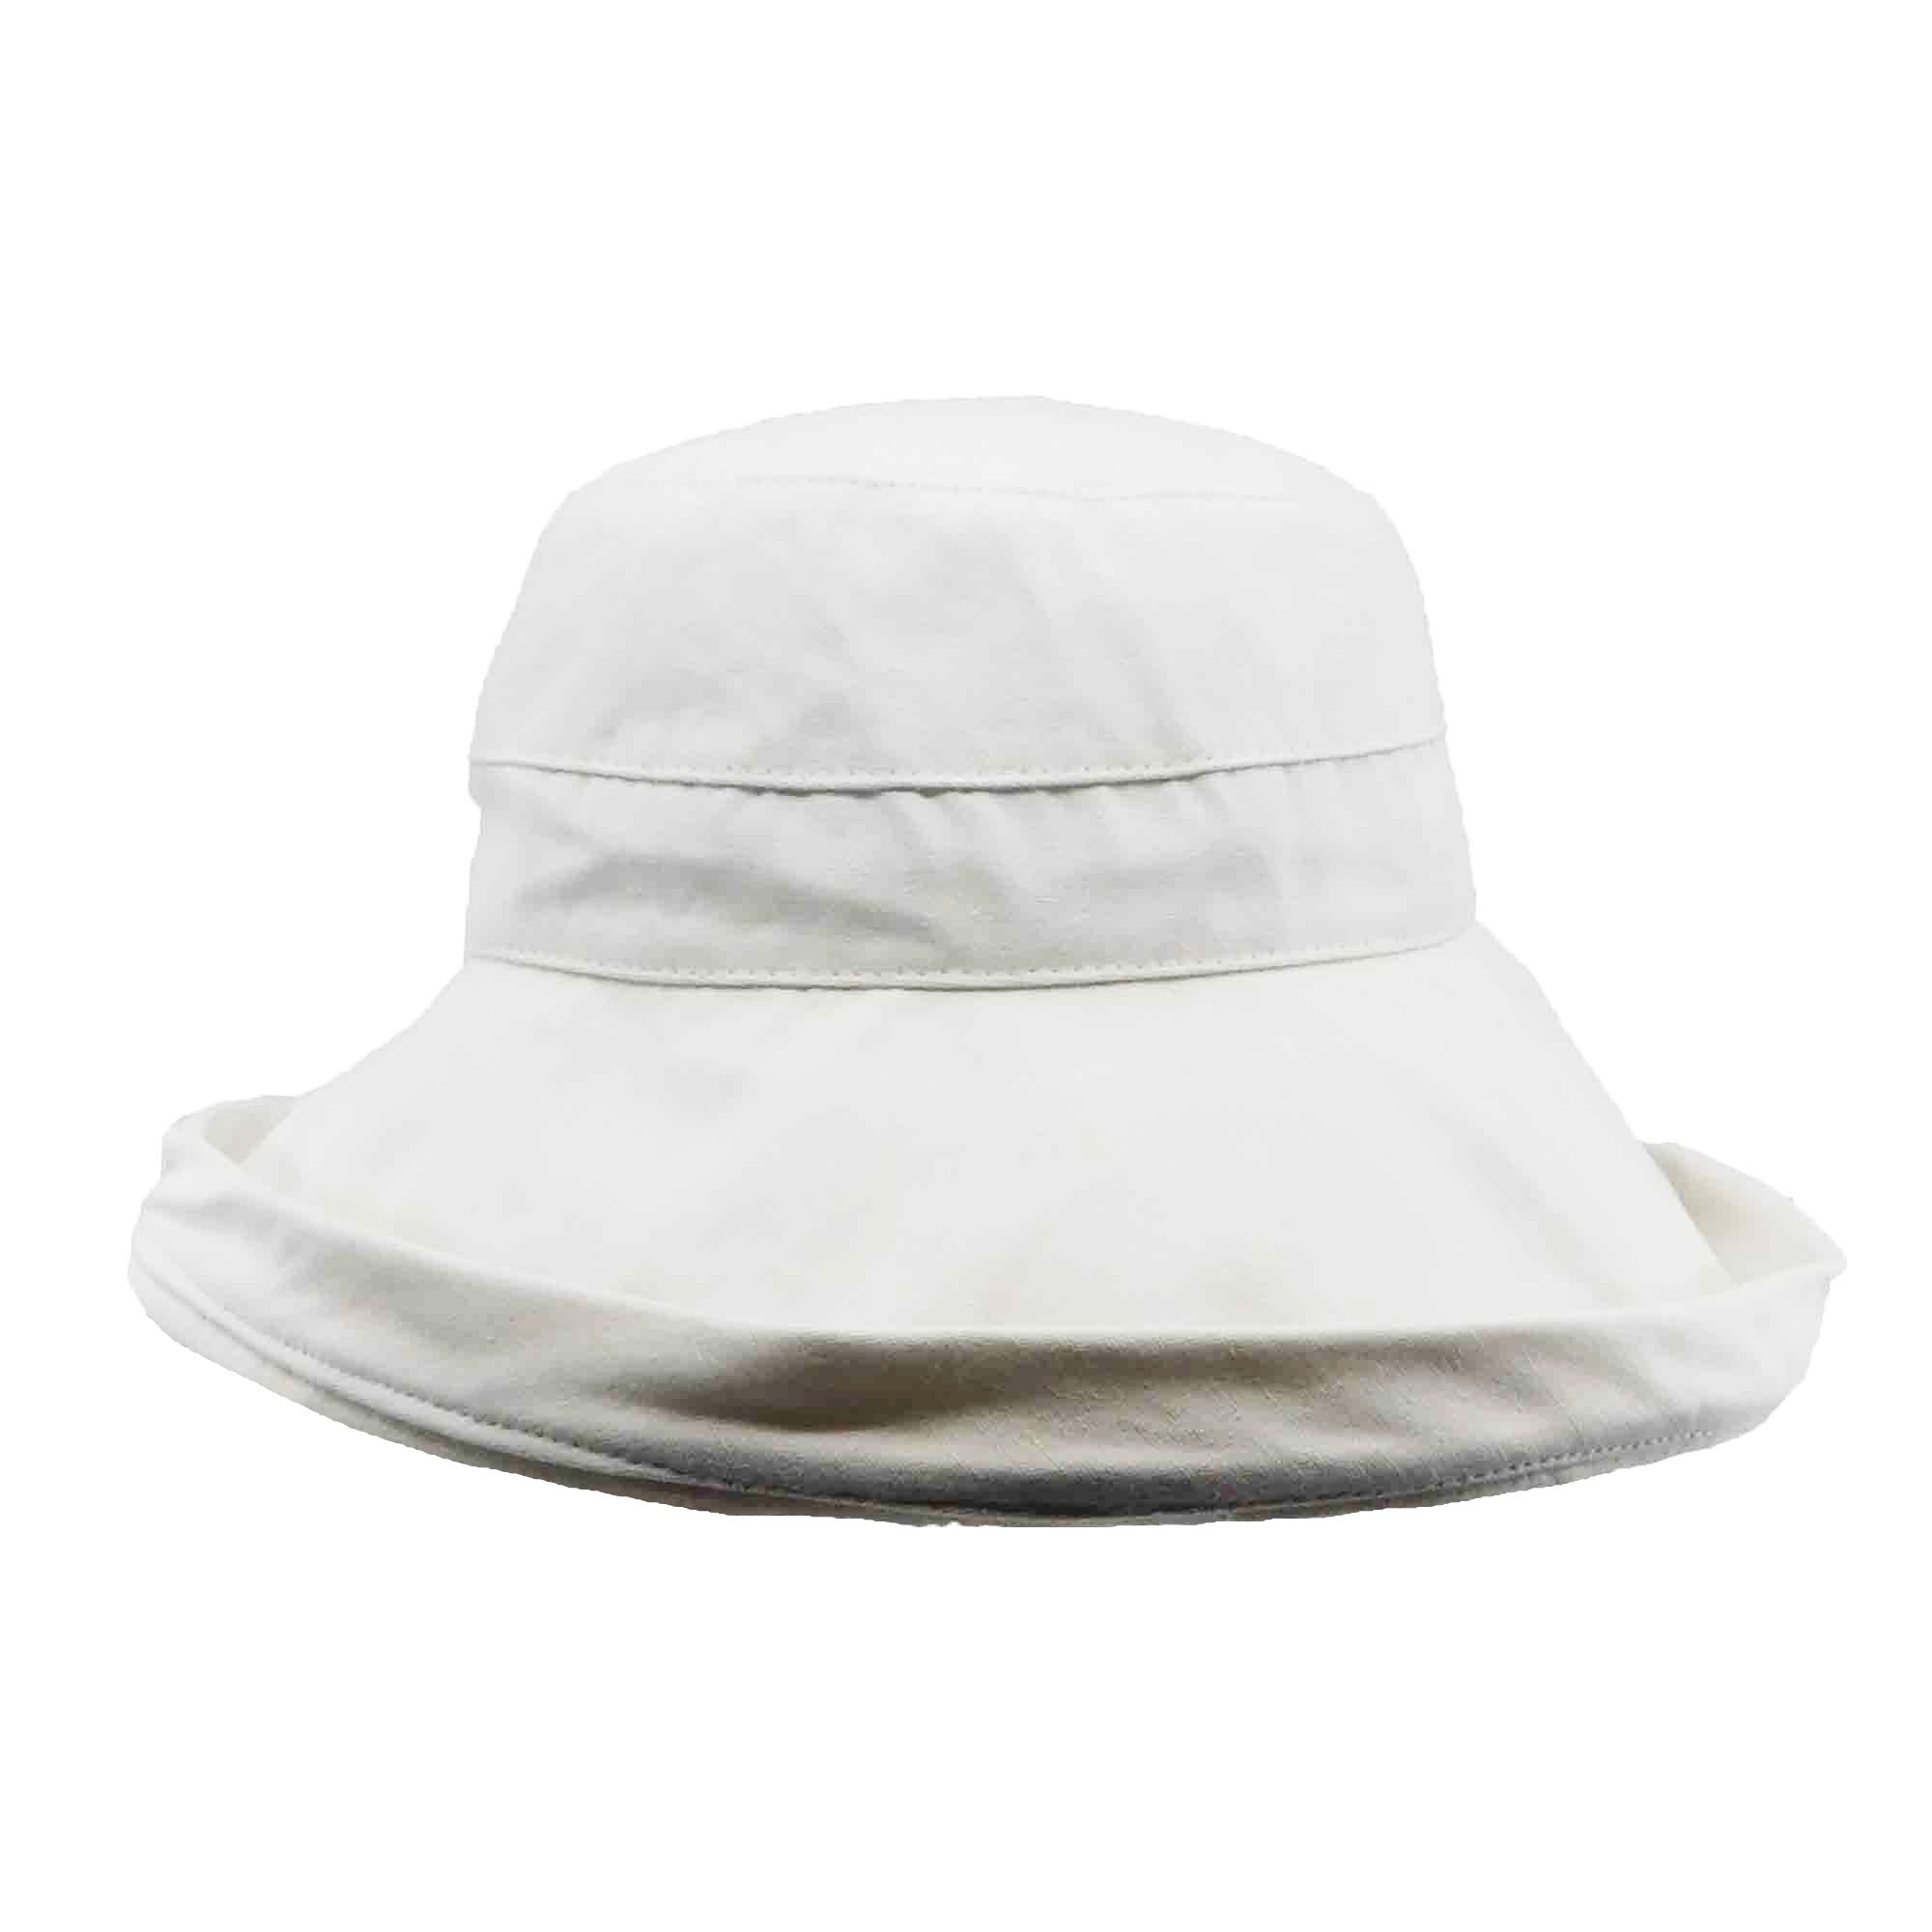 Upturned Brim Cotton Breton Hat - Milani Hats Kettle Brim Hat Milani Hats WSCT473WH White M/L (58.5 cm) 